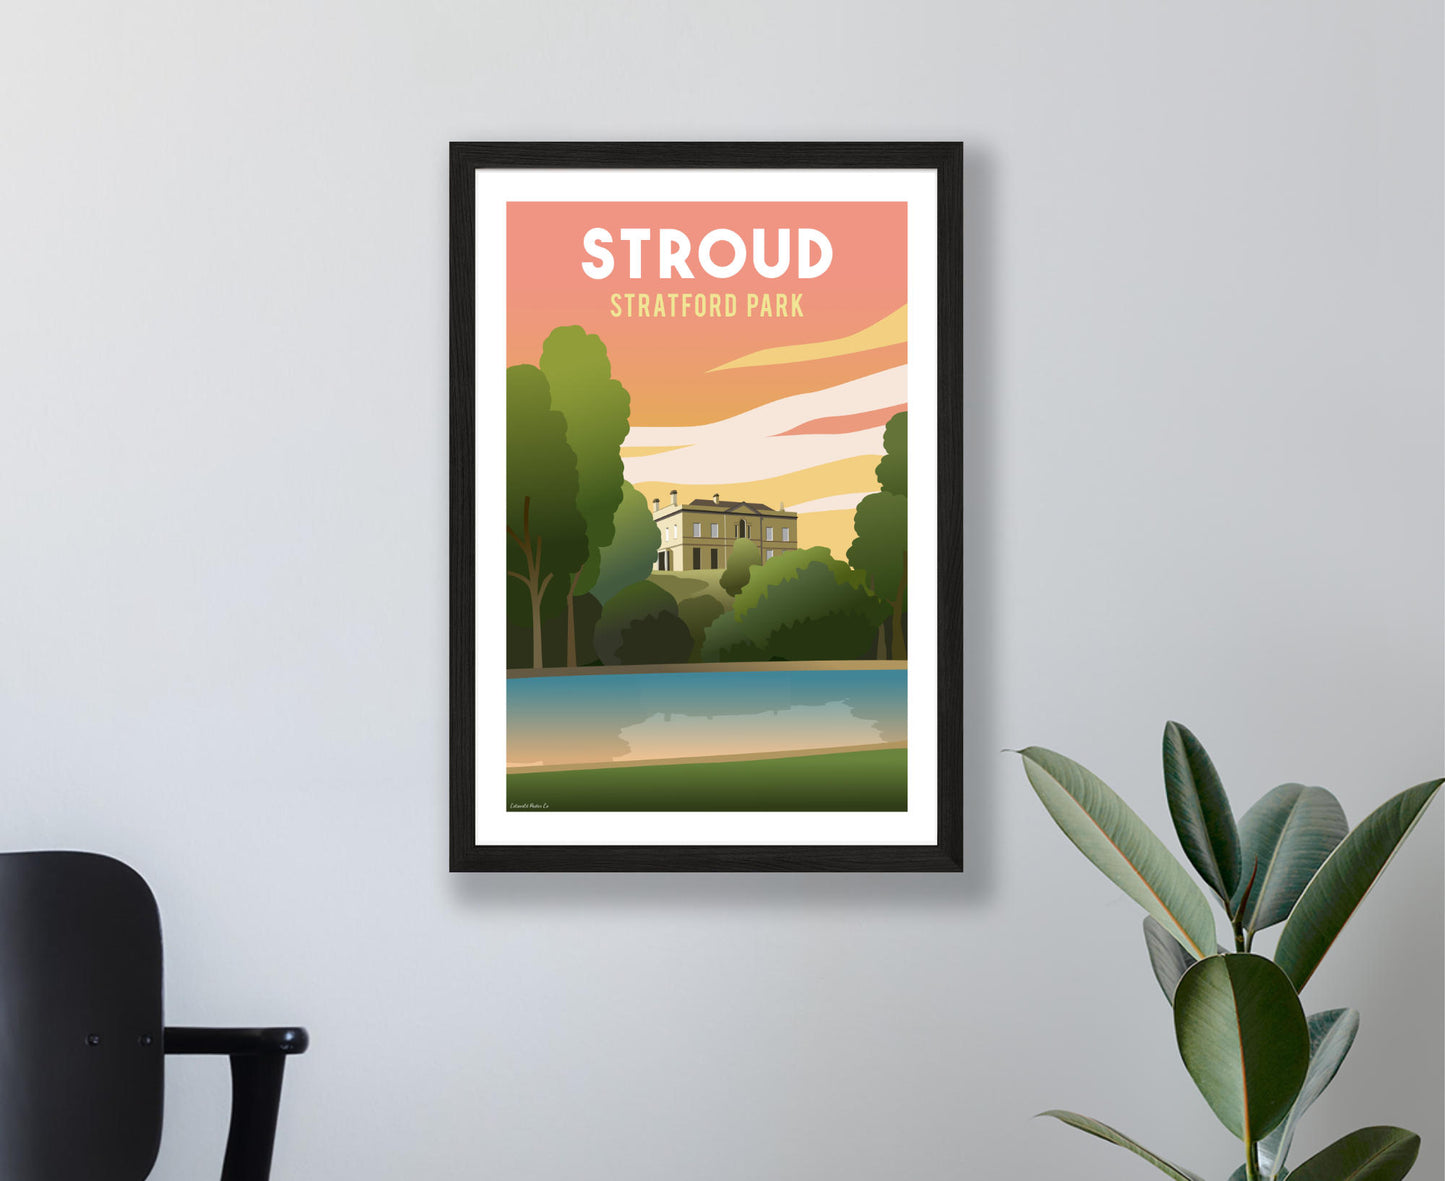 Stroud Stratford Park Poster in black frame